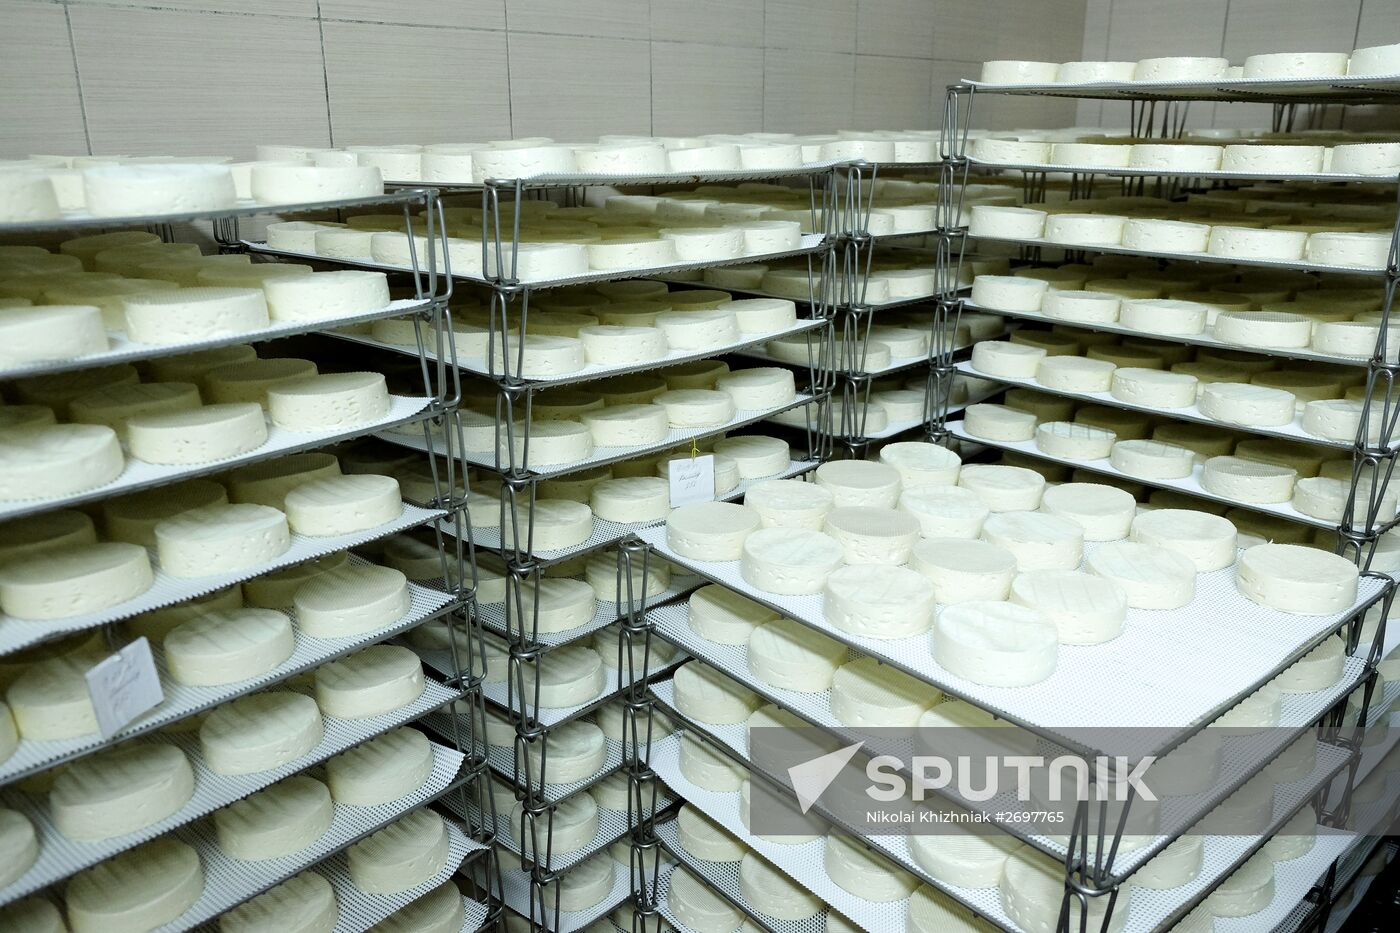 Camembert cheese production in Krasnodar Territory